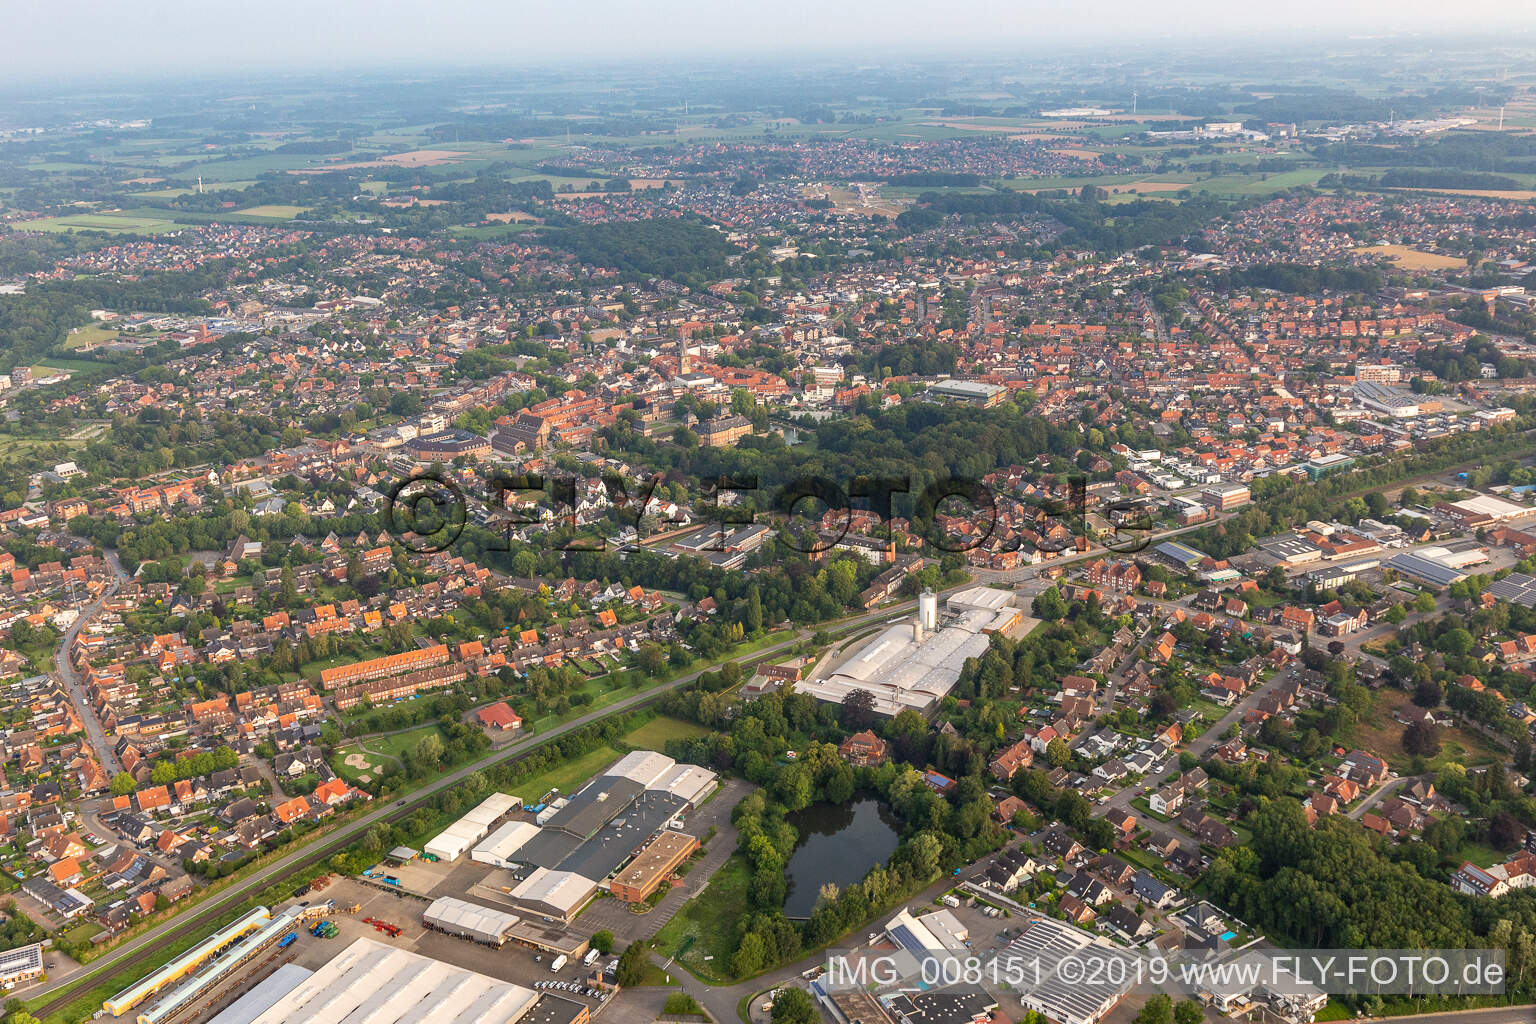 Aerial view of Ahaus in the state North Rhine-Westphalia, Germany